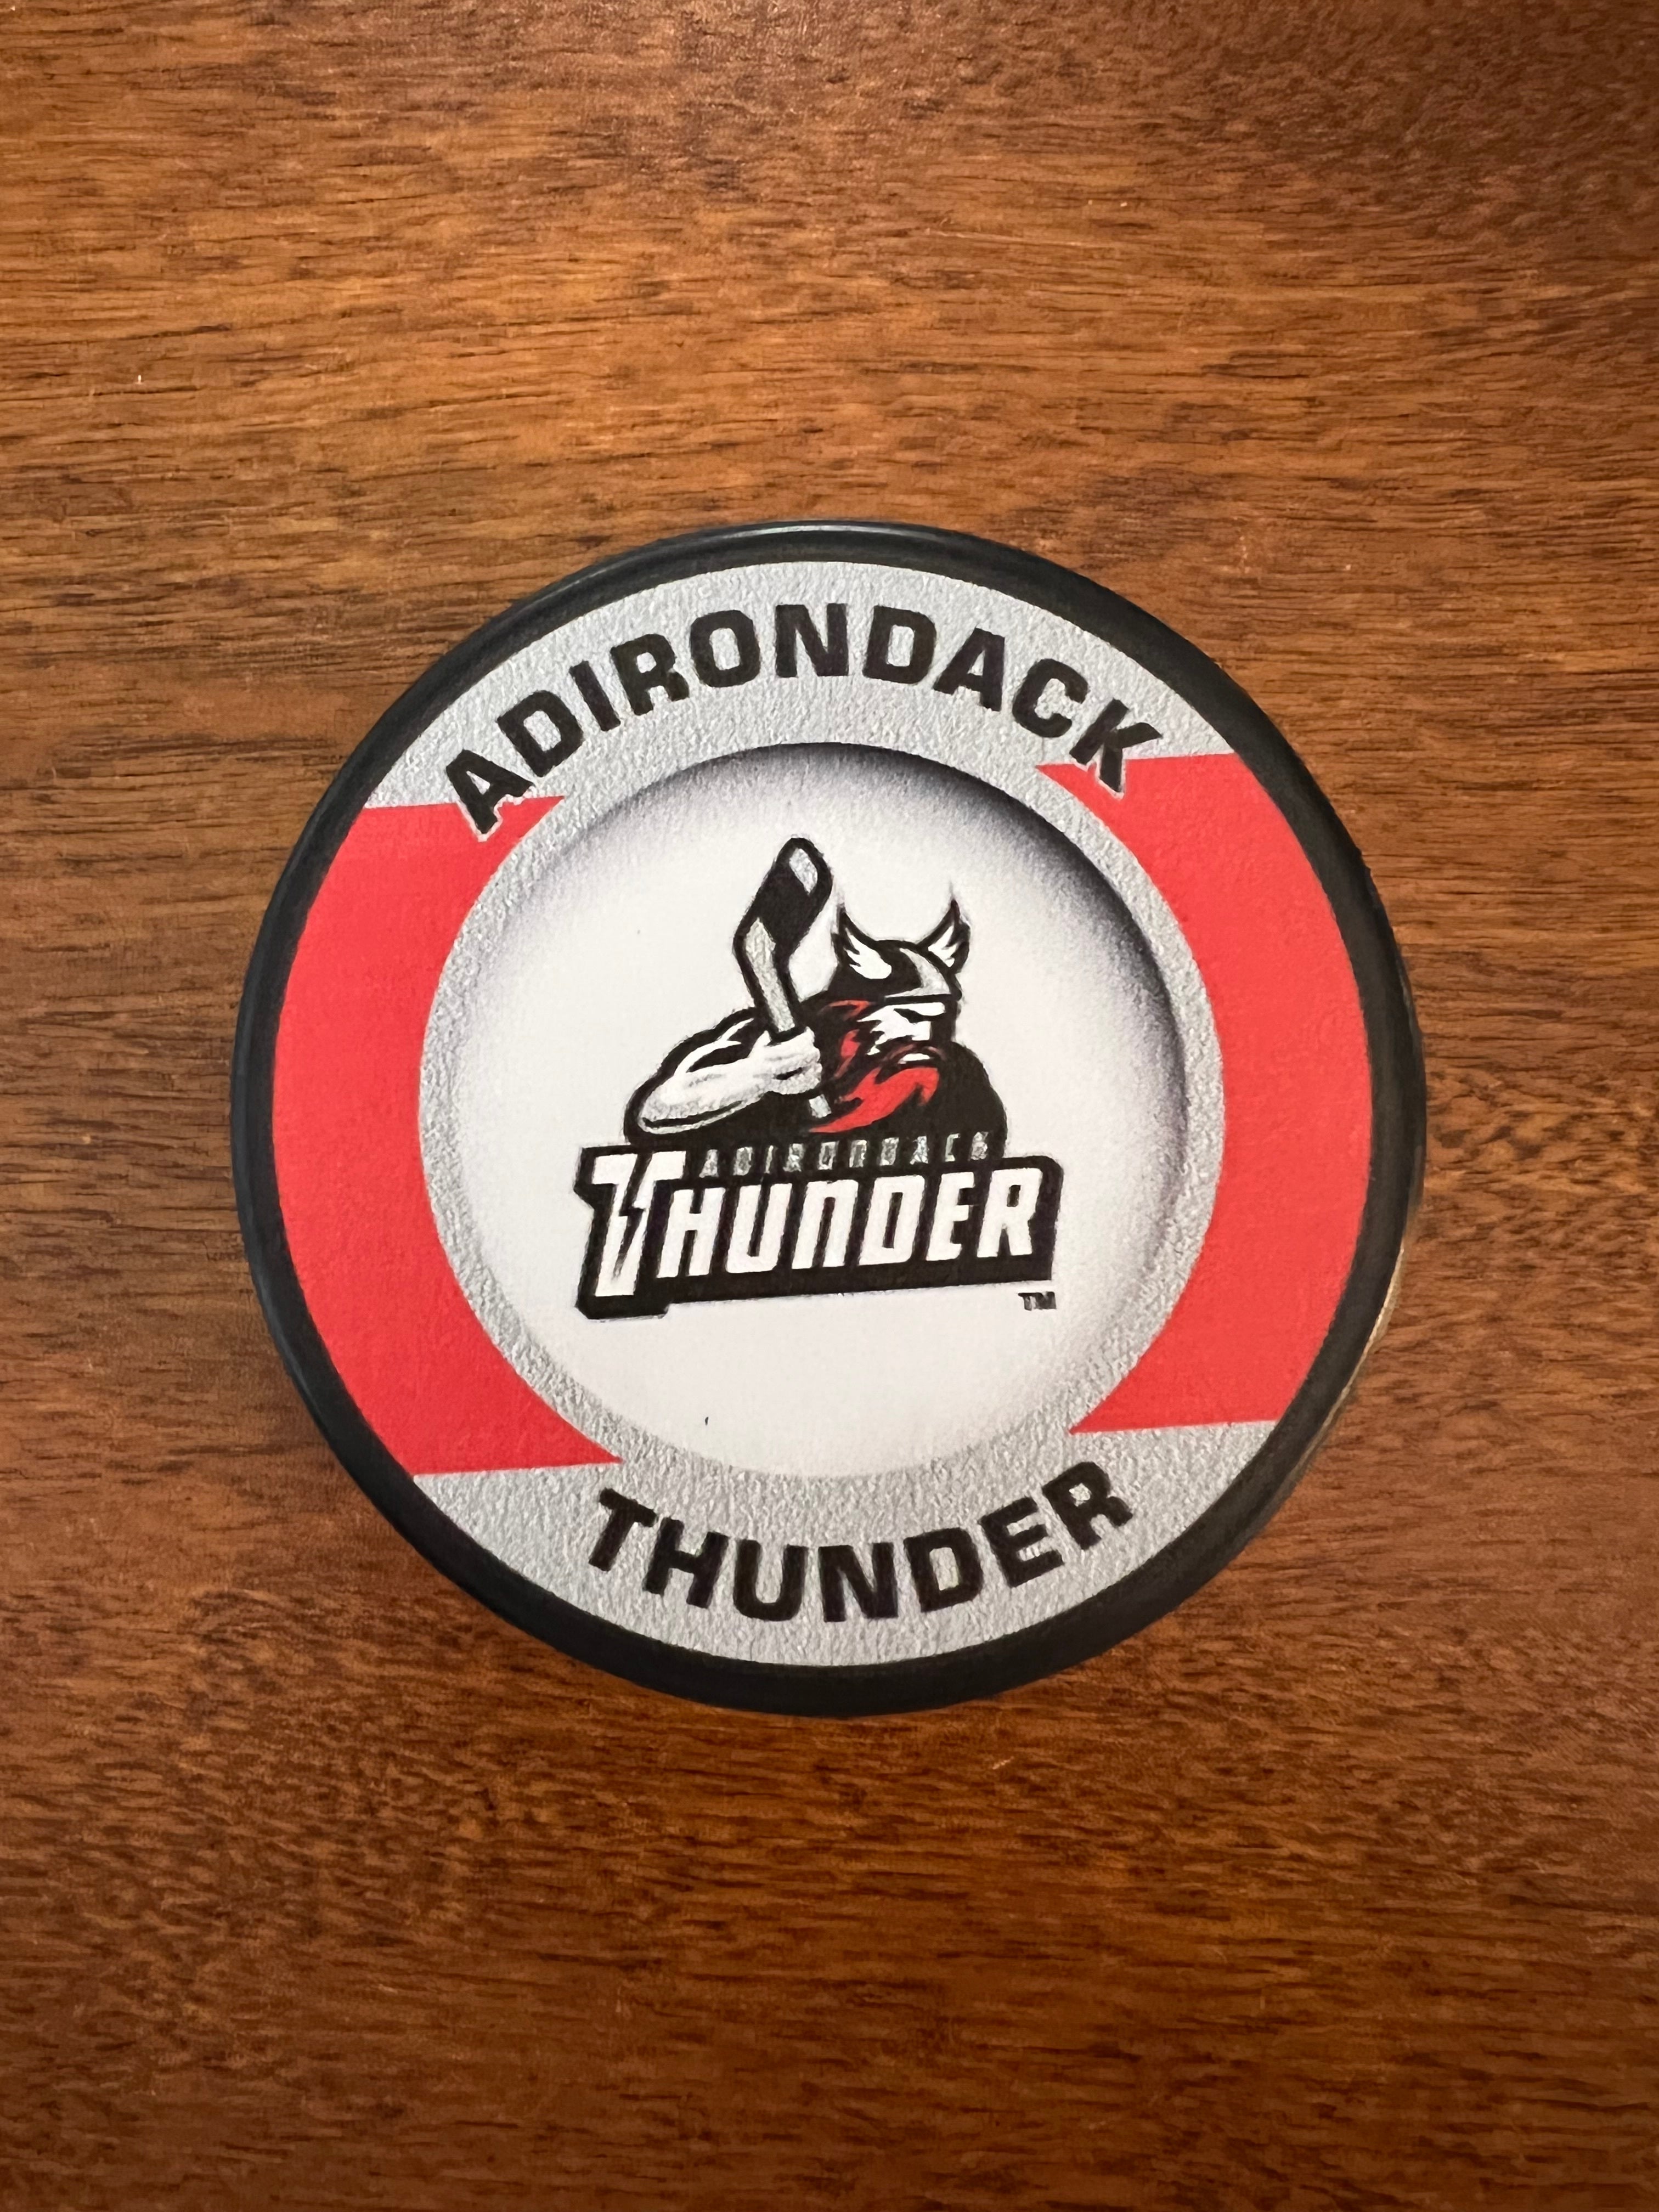 adirondack thunder jerseys on sale